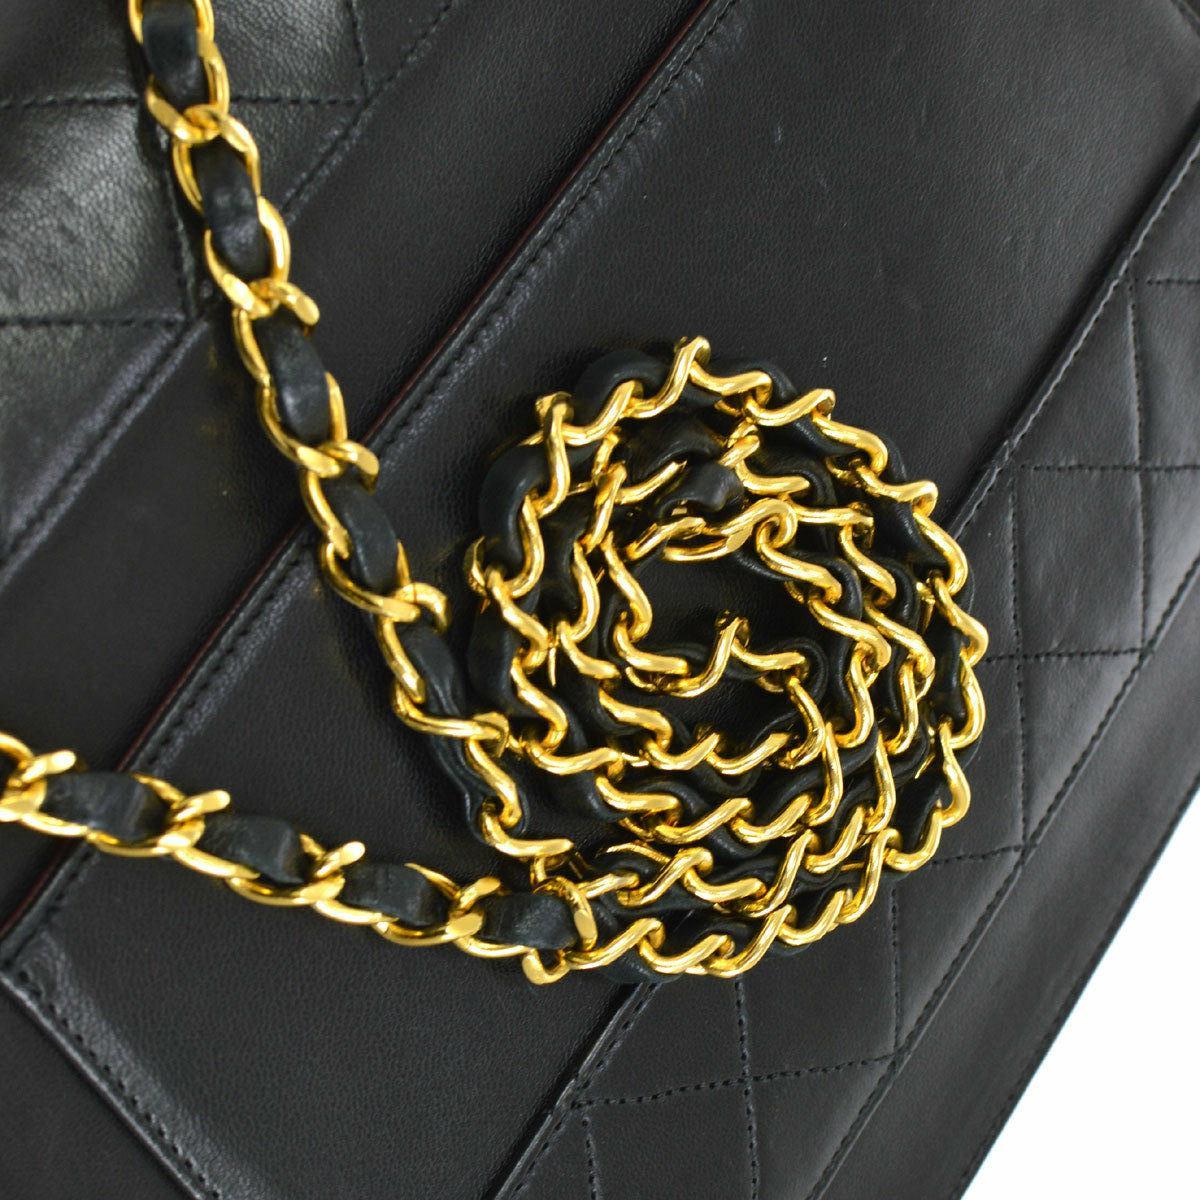 Chanel Vintage Black Leather Gold Box Small Kelly Evening Shoulder Flap Bag

Leather
Gold tone hardware
Leather lining
Date code present
Made in France
Shoulder strap drop 17